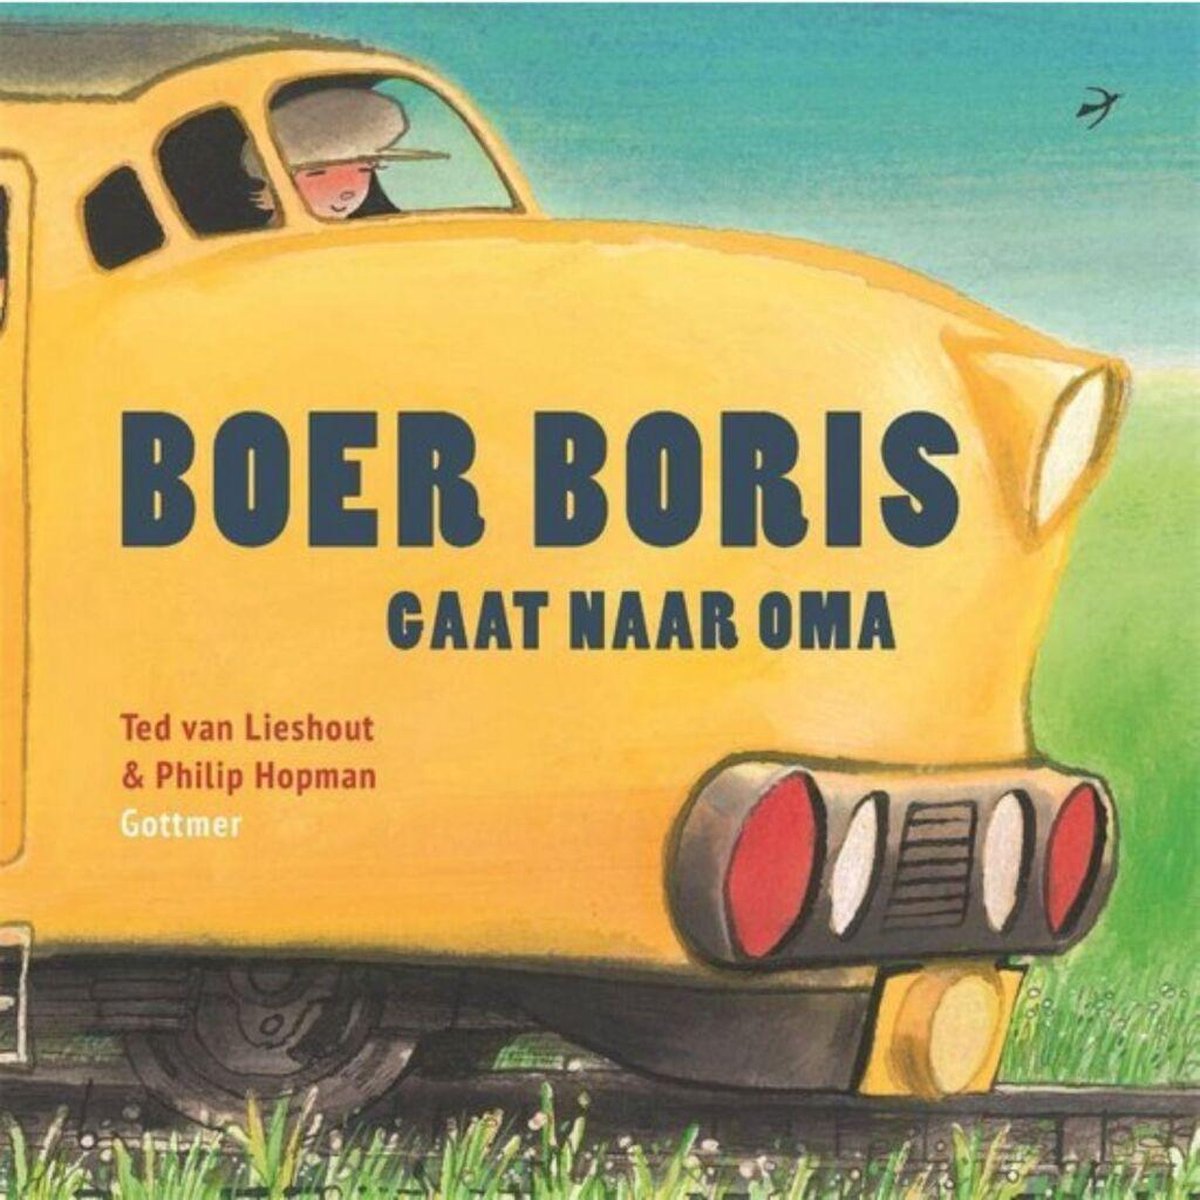 Boer Boris gaat naar oma - Ted van Lieshout (vanaf 2 jaar)